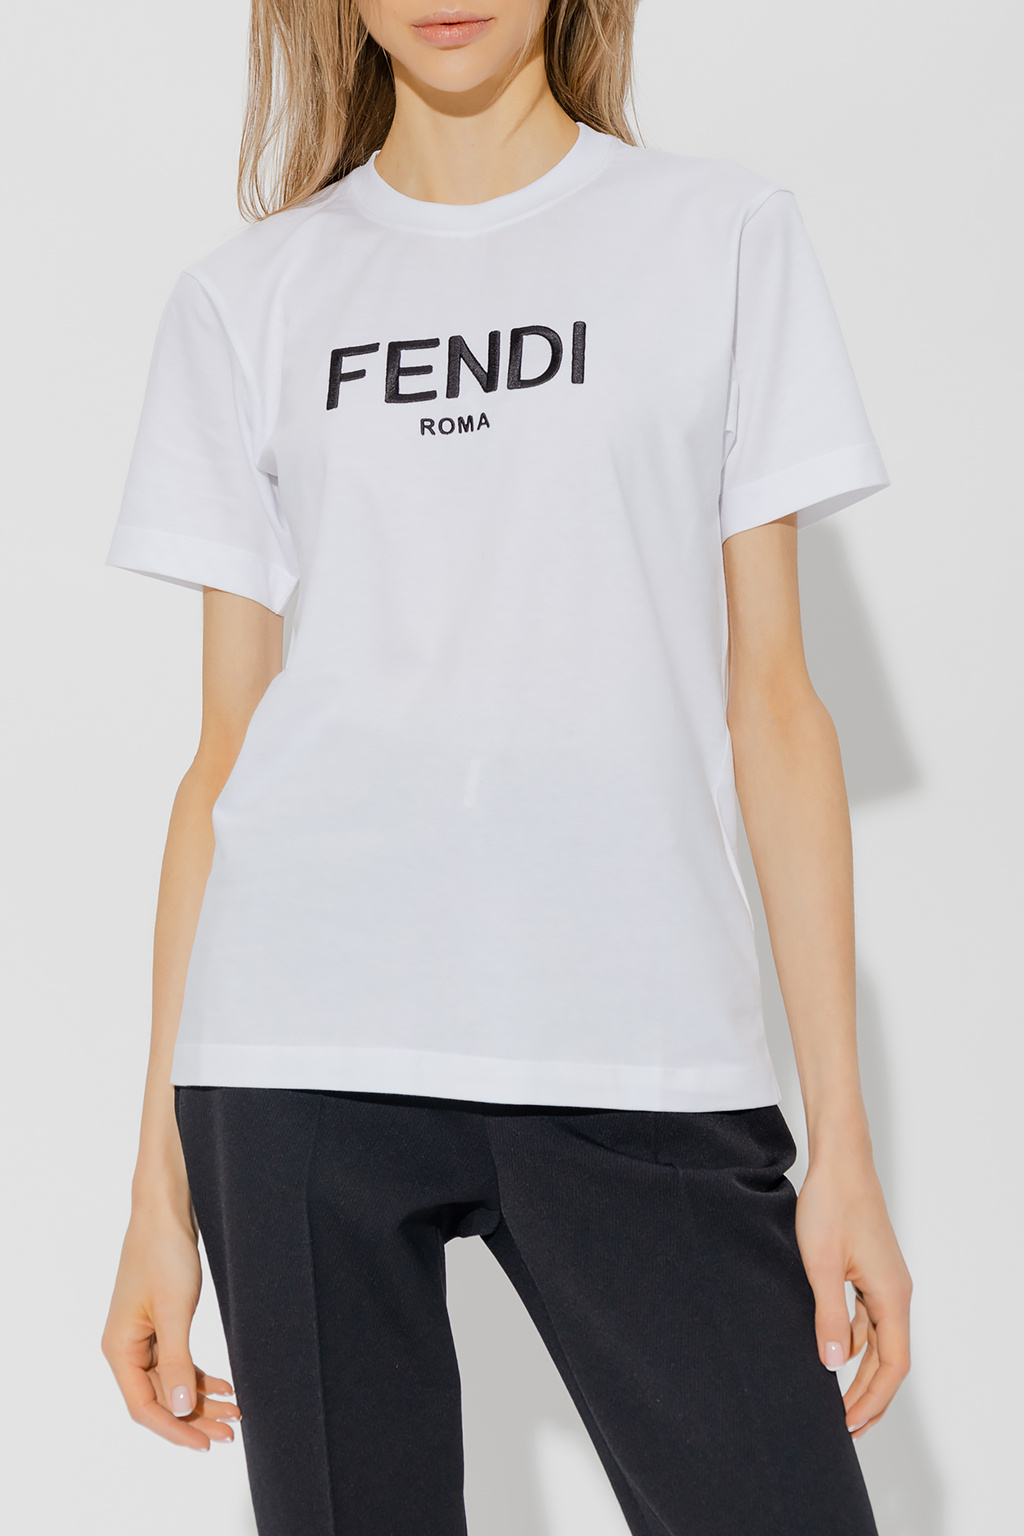 fendi grenat T-shirt with logo